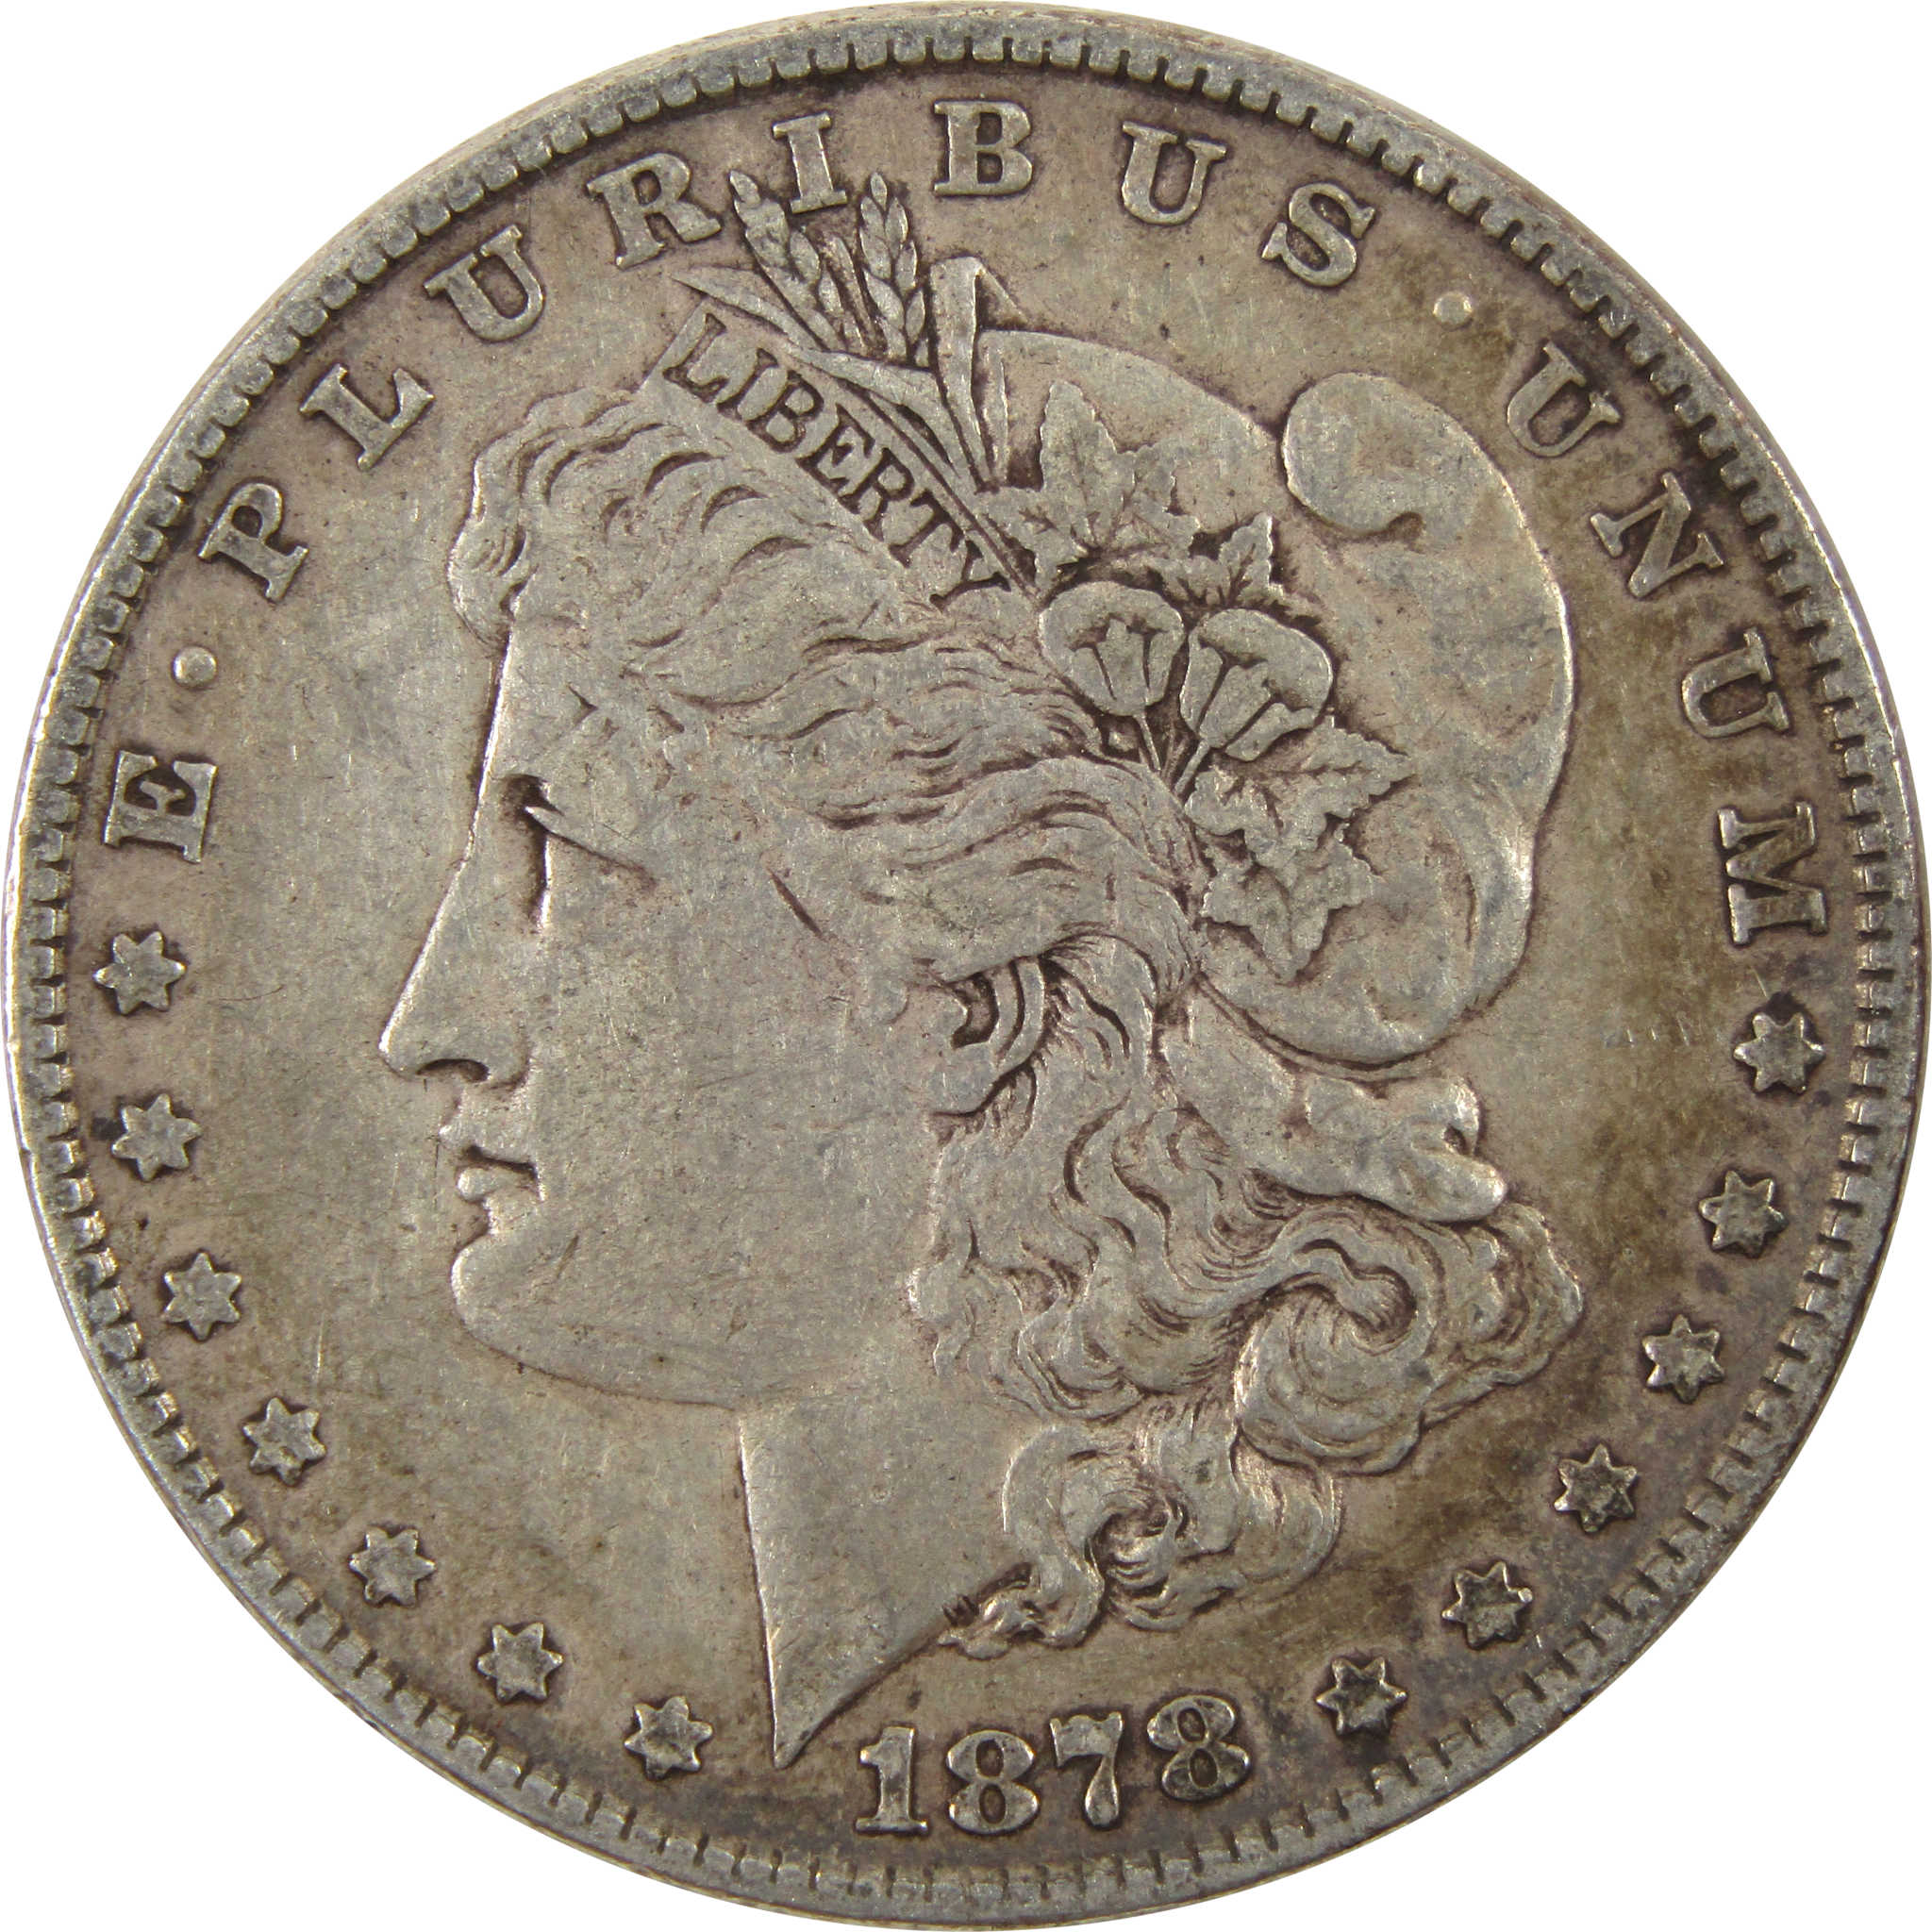 1878 7TF Rev 79 Morgan Dollar VF Very Fine Silver $1 Coin SKU:I9158 - Morgan coin - Morgan silver dollar - Morgan silver dollar for sale - Profile Coins &amp; Collectibles